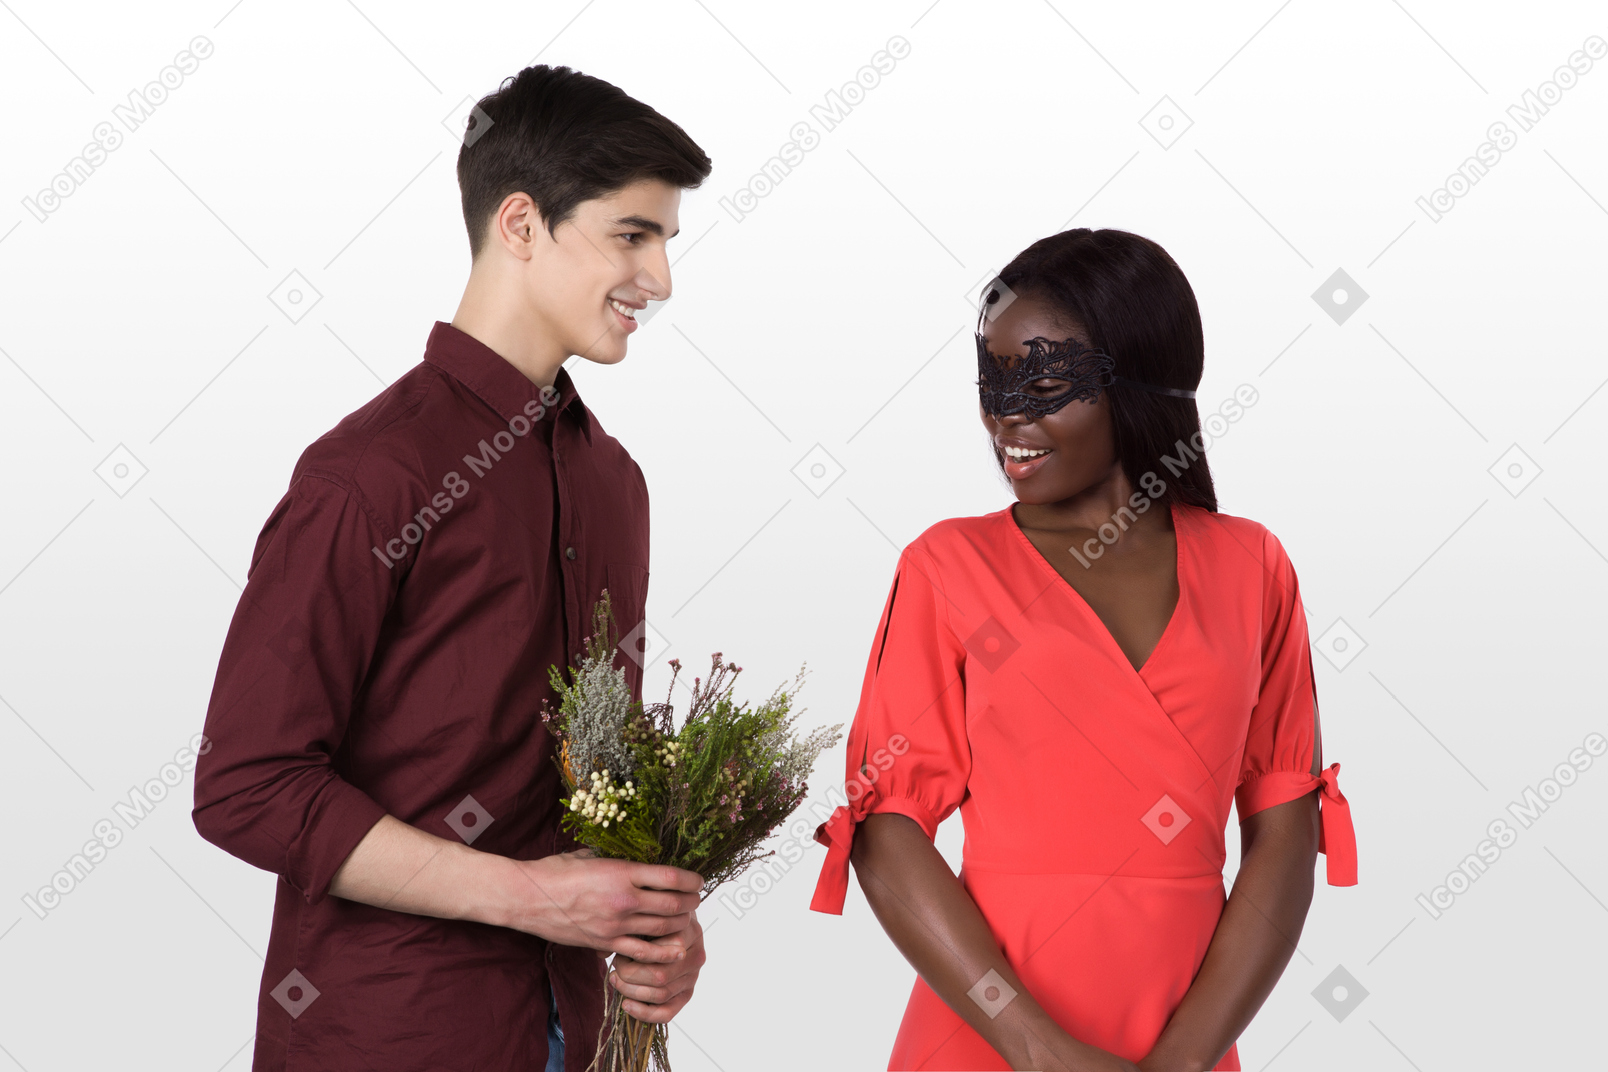 Homem bonito trouxe algumas flores para sua namorada na máscara de carnaval